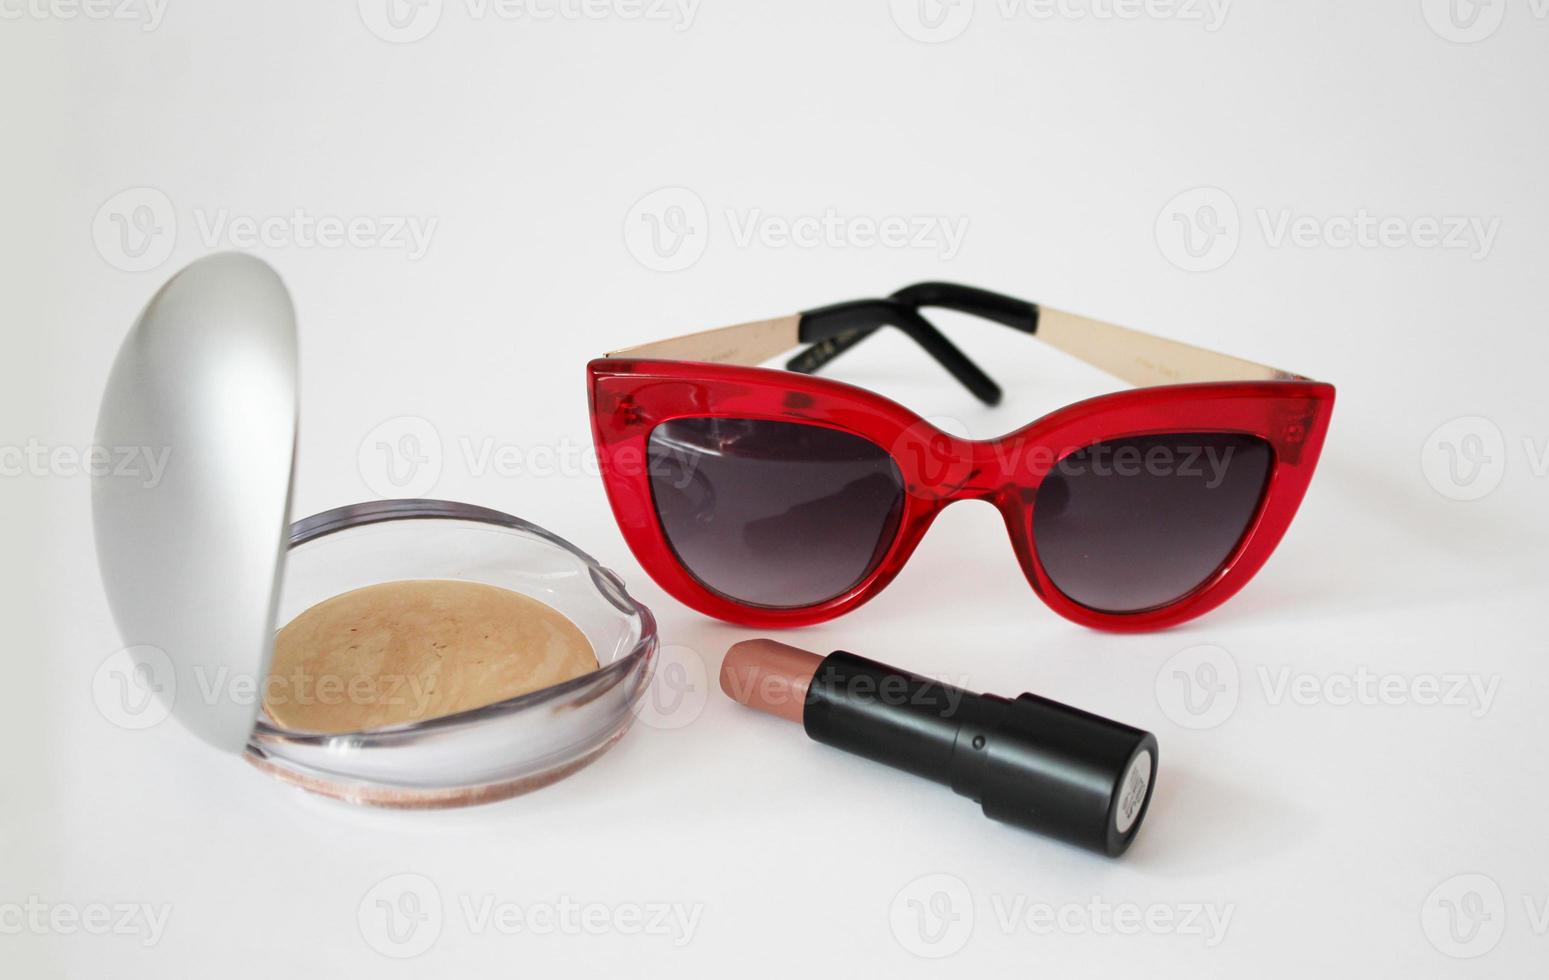 cosmetici da donna e occhiali da sole rossi foto